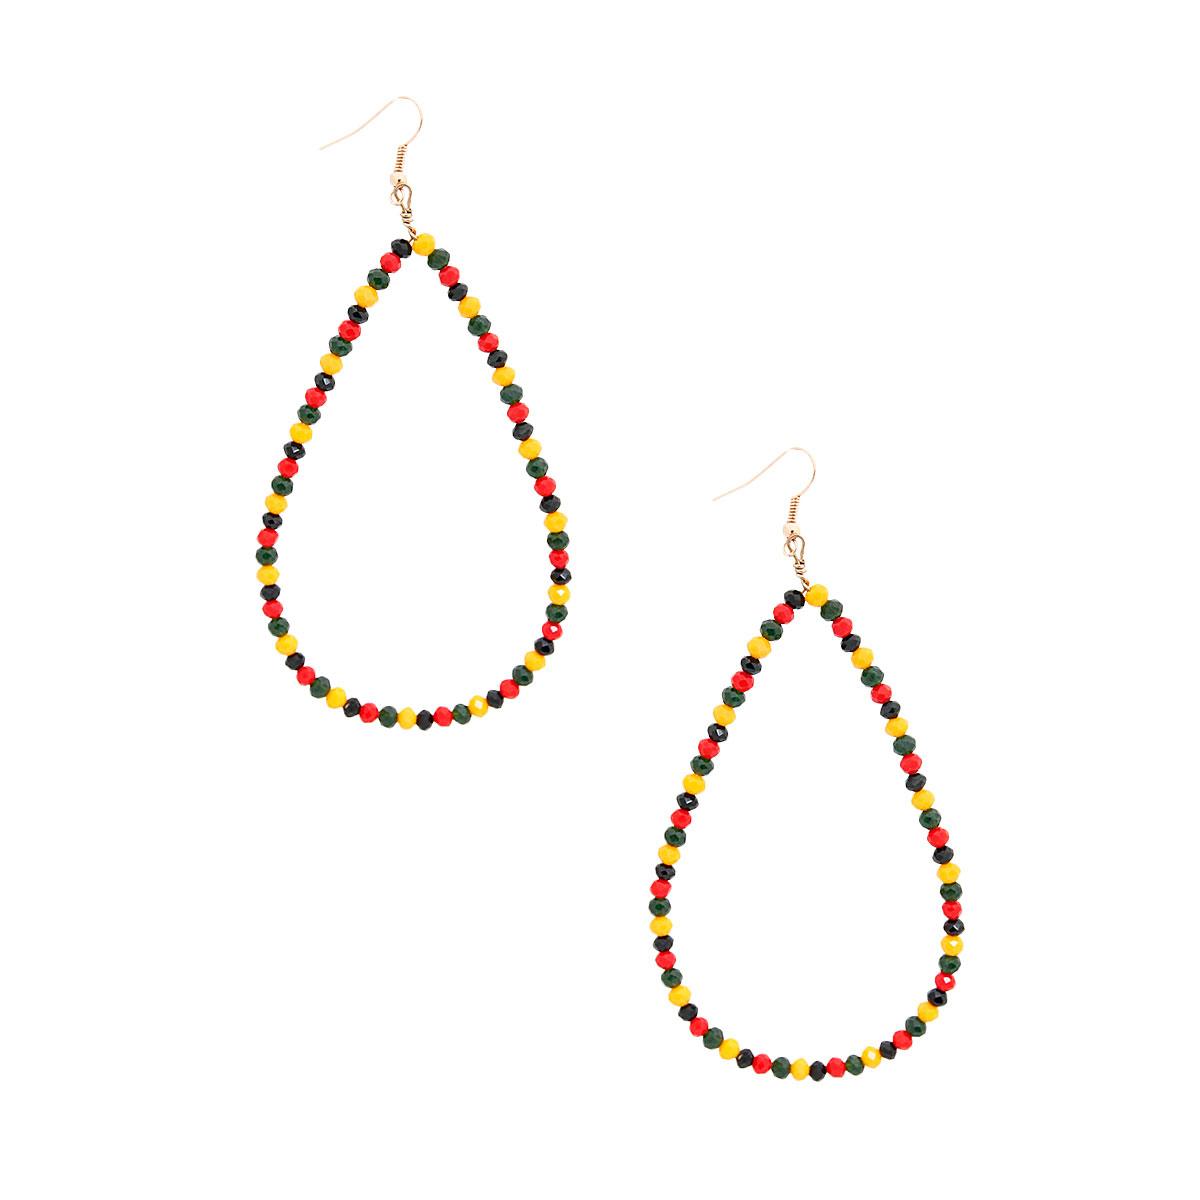 Stylish Teardrop Earrings - Bead Dangle Jewelry for Any Occasion